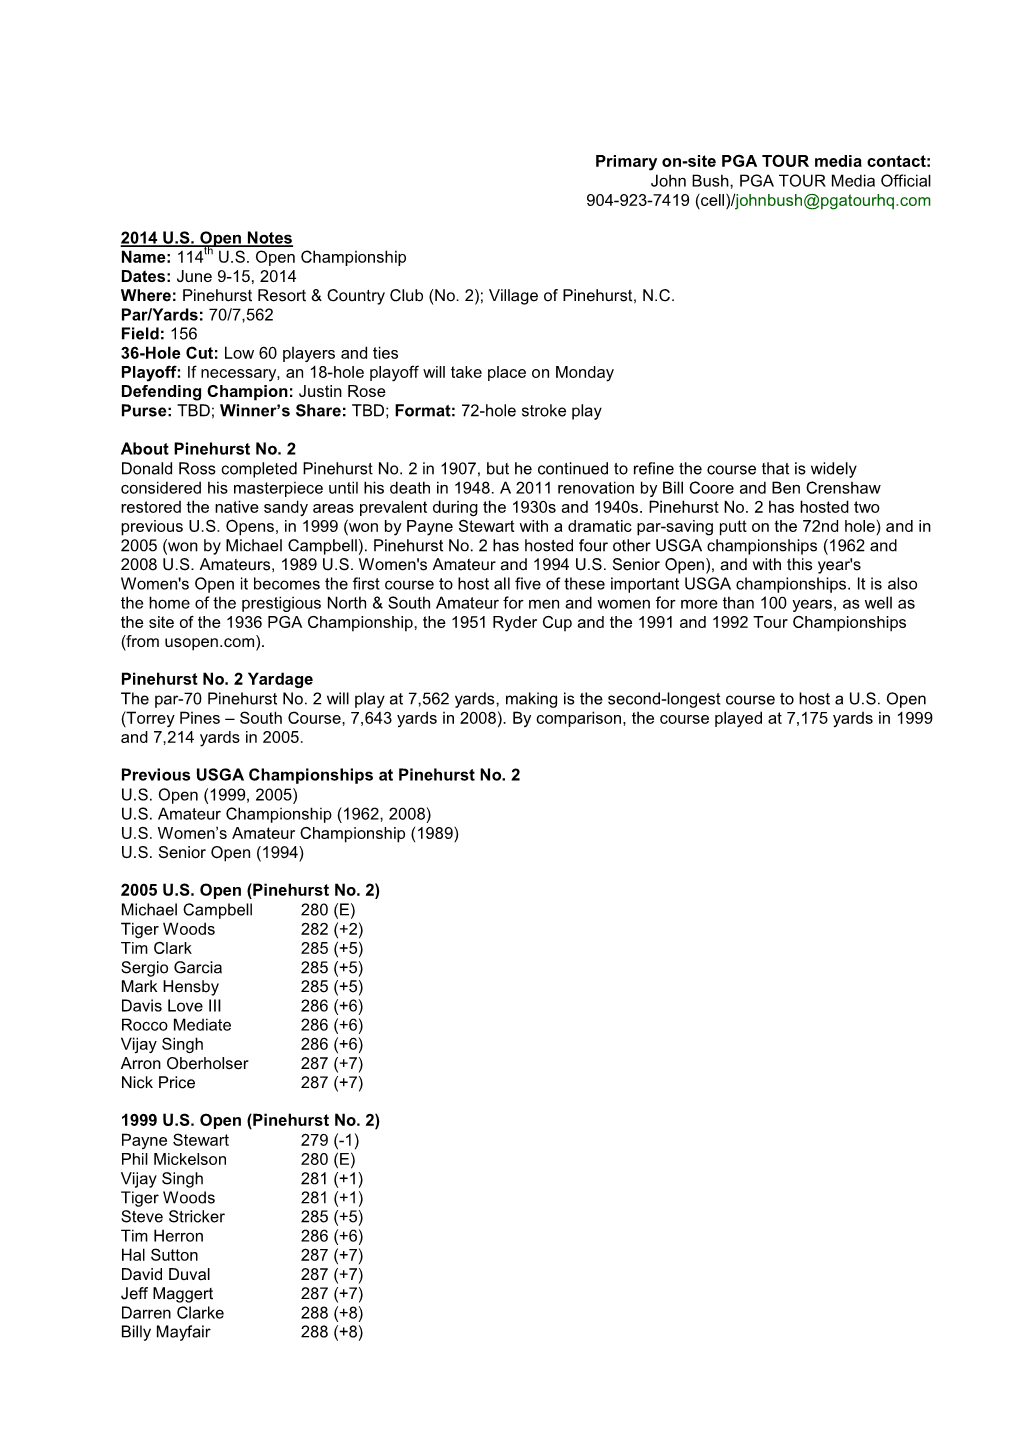 2014 U.S. Open Pre-Tournament Notes